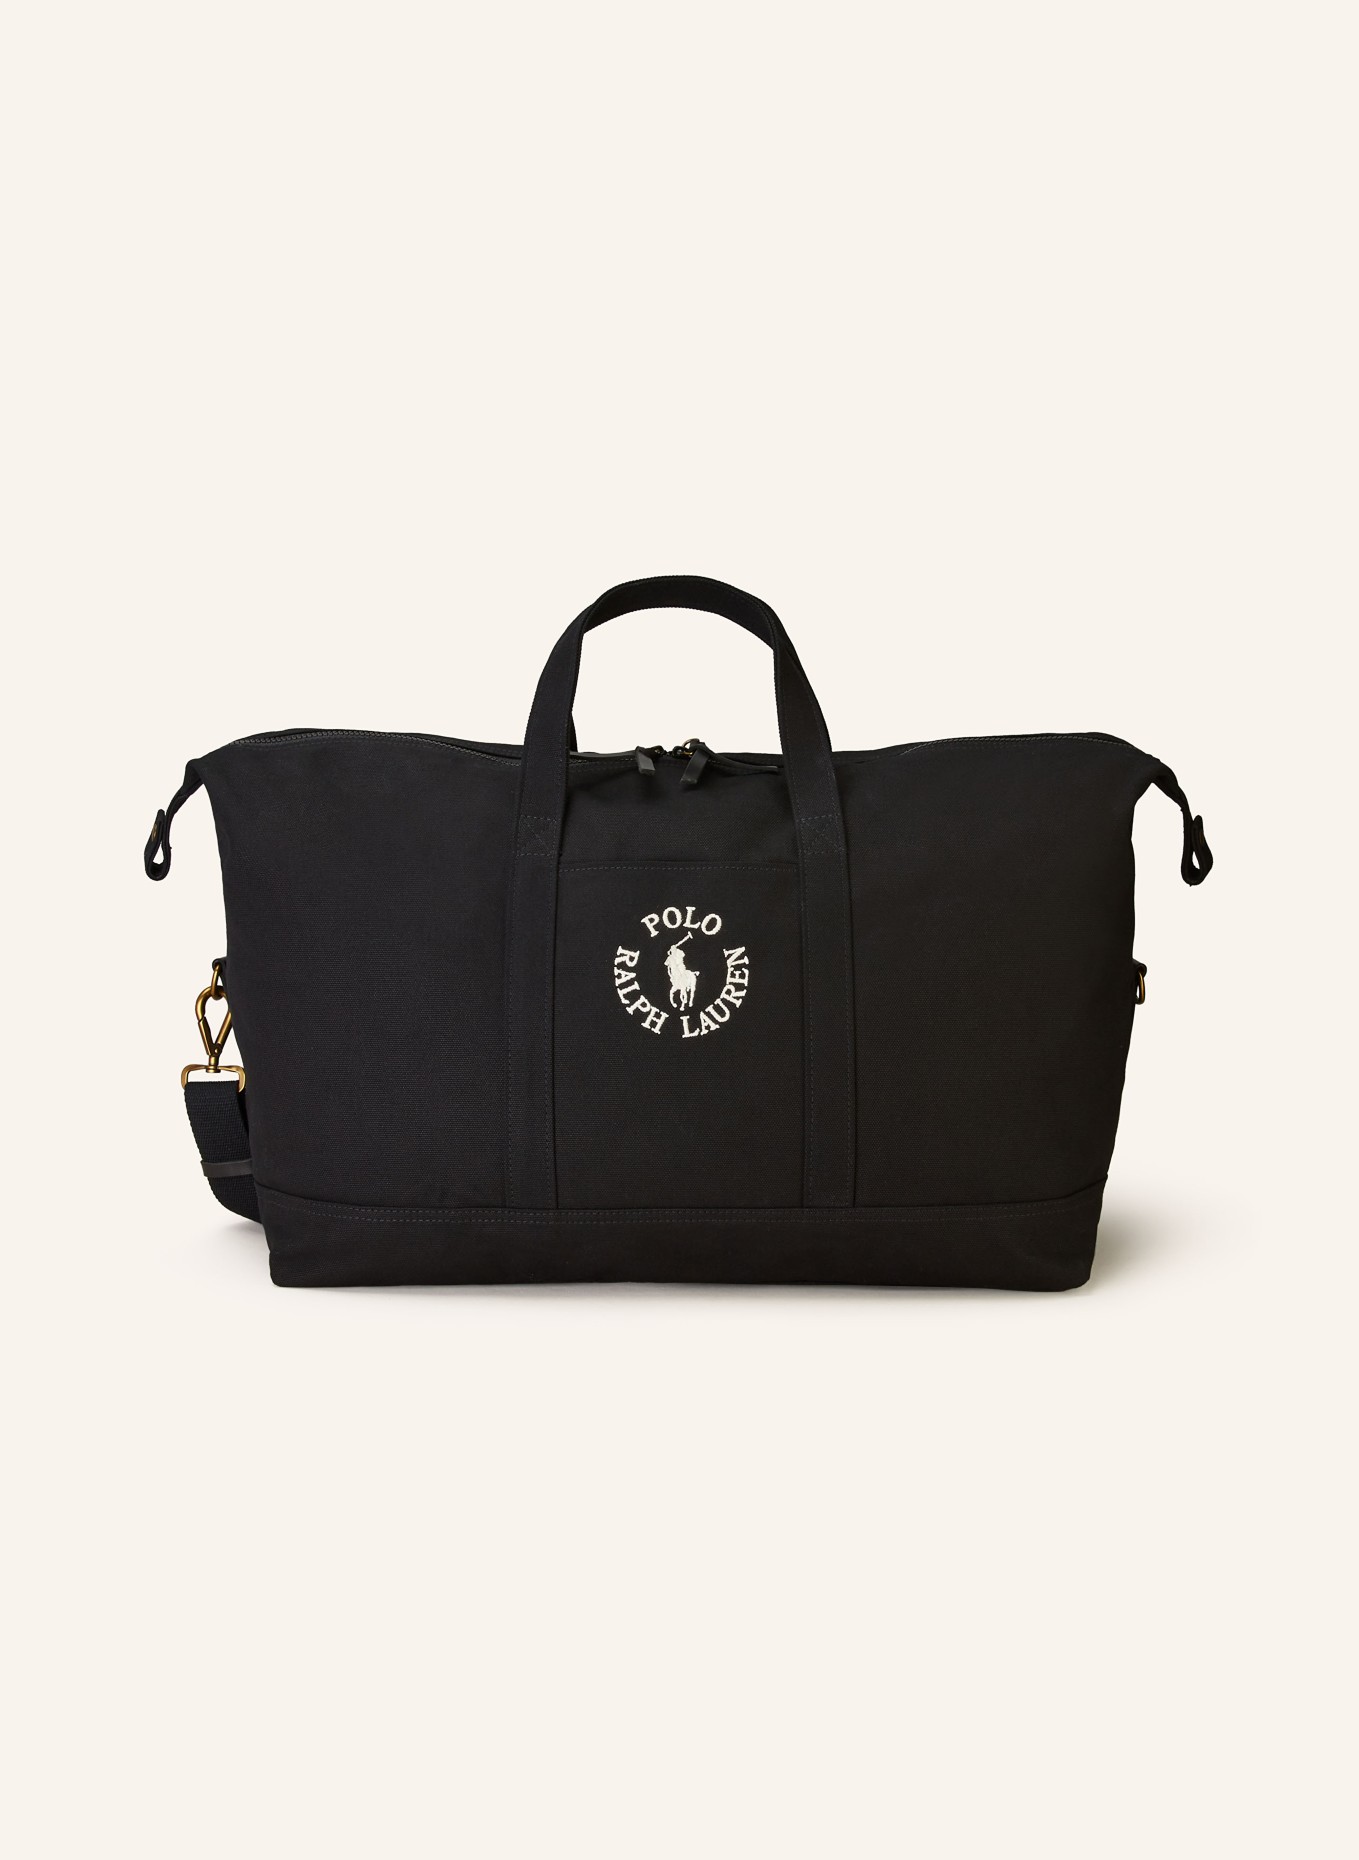 POLO RALPH LAUREN Travel bag in black